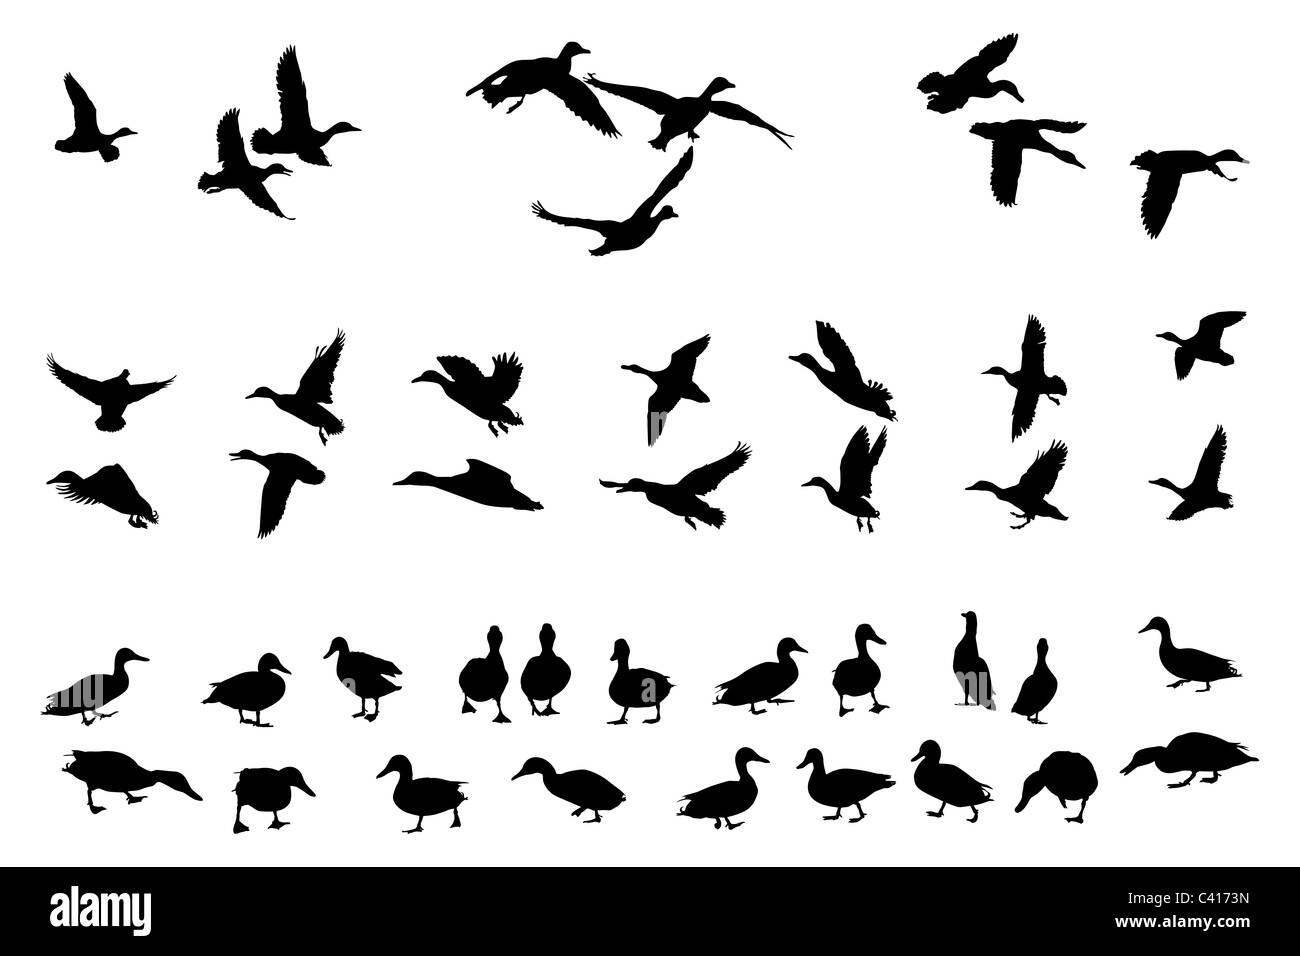 collection of mallard duck silhouettes Stock Photo